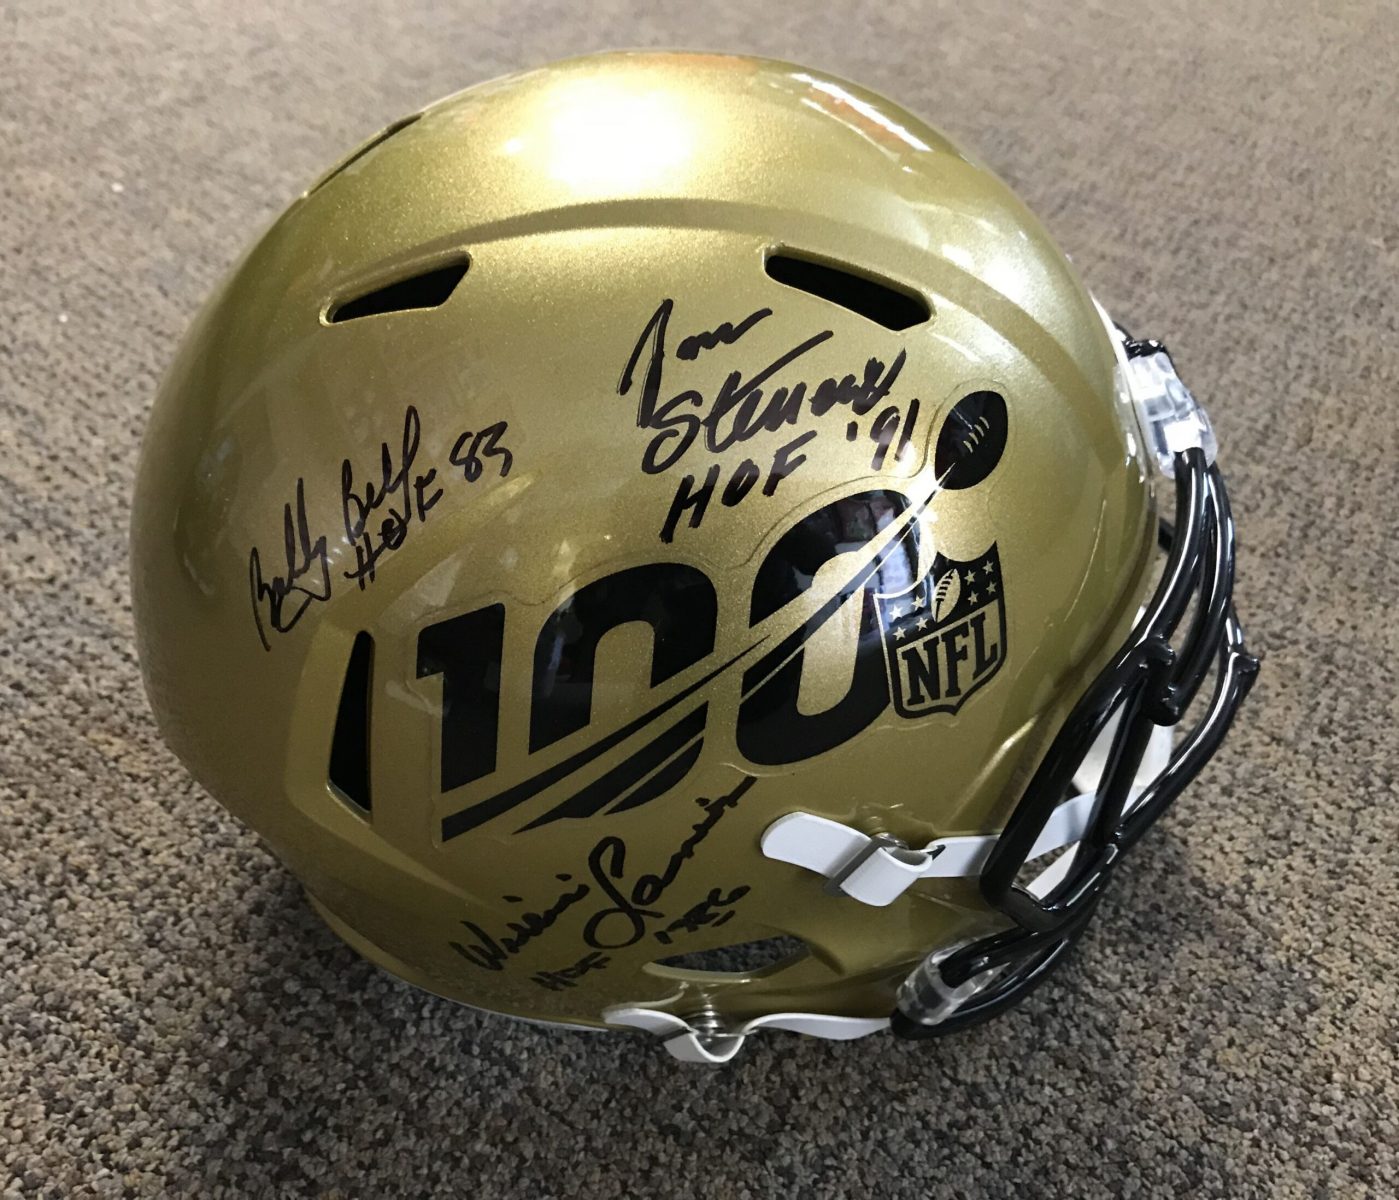 NFL-100-helmet-scaled